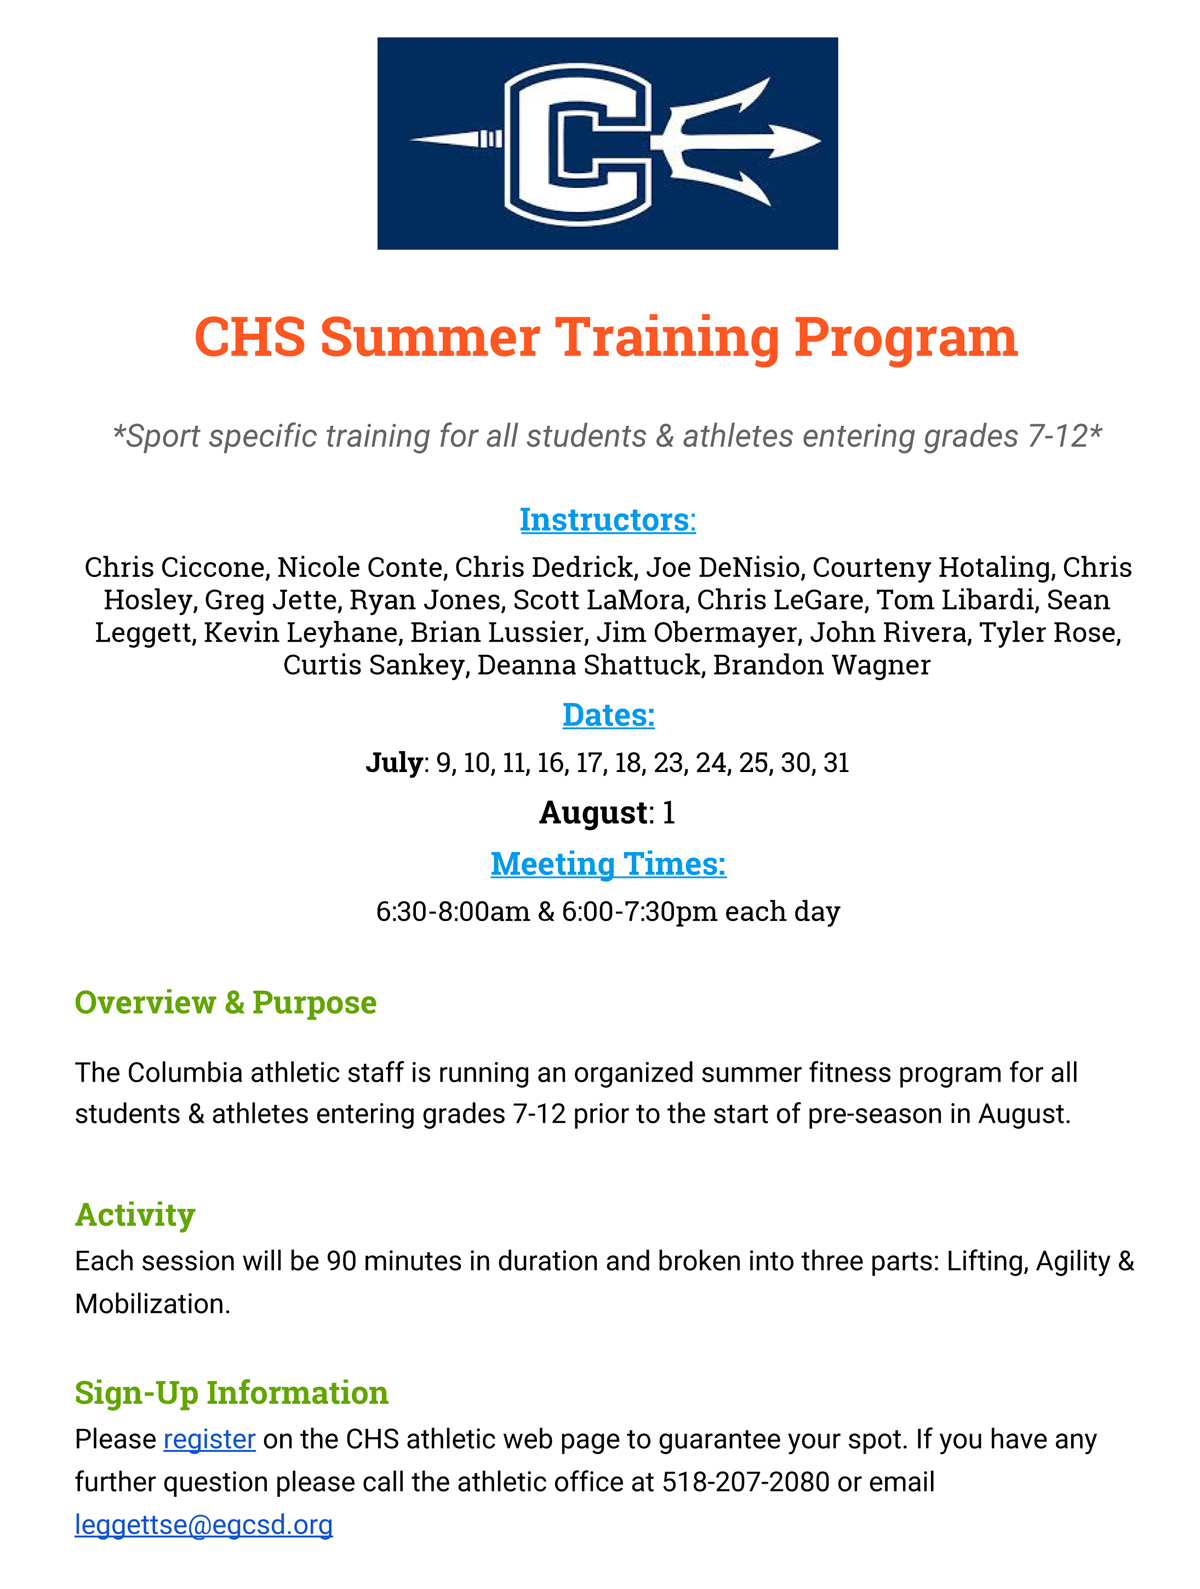 2019 CHS Summer Training Program